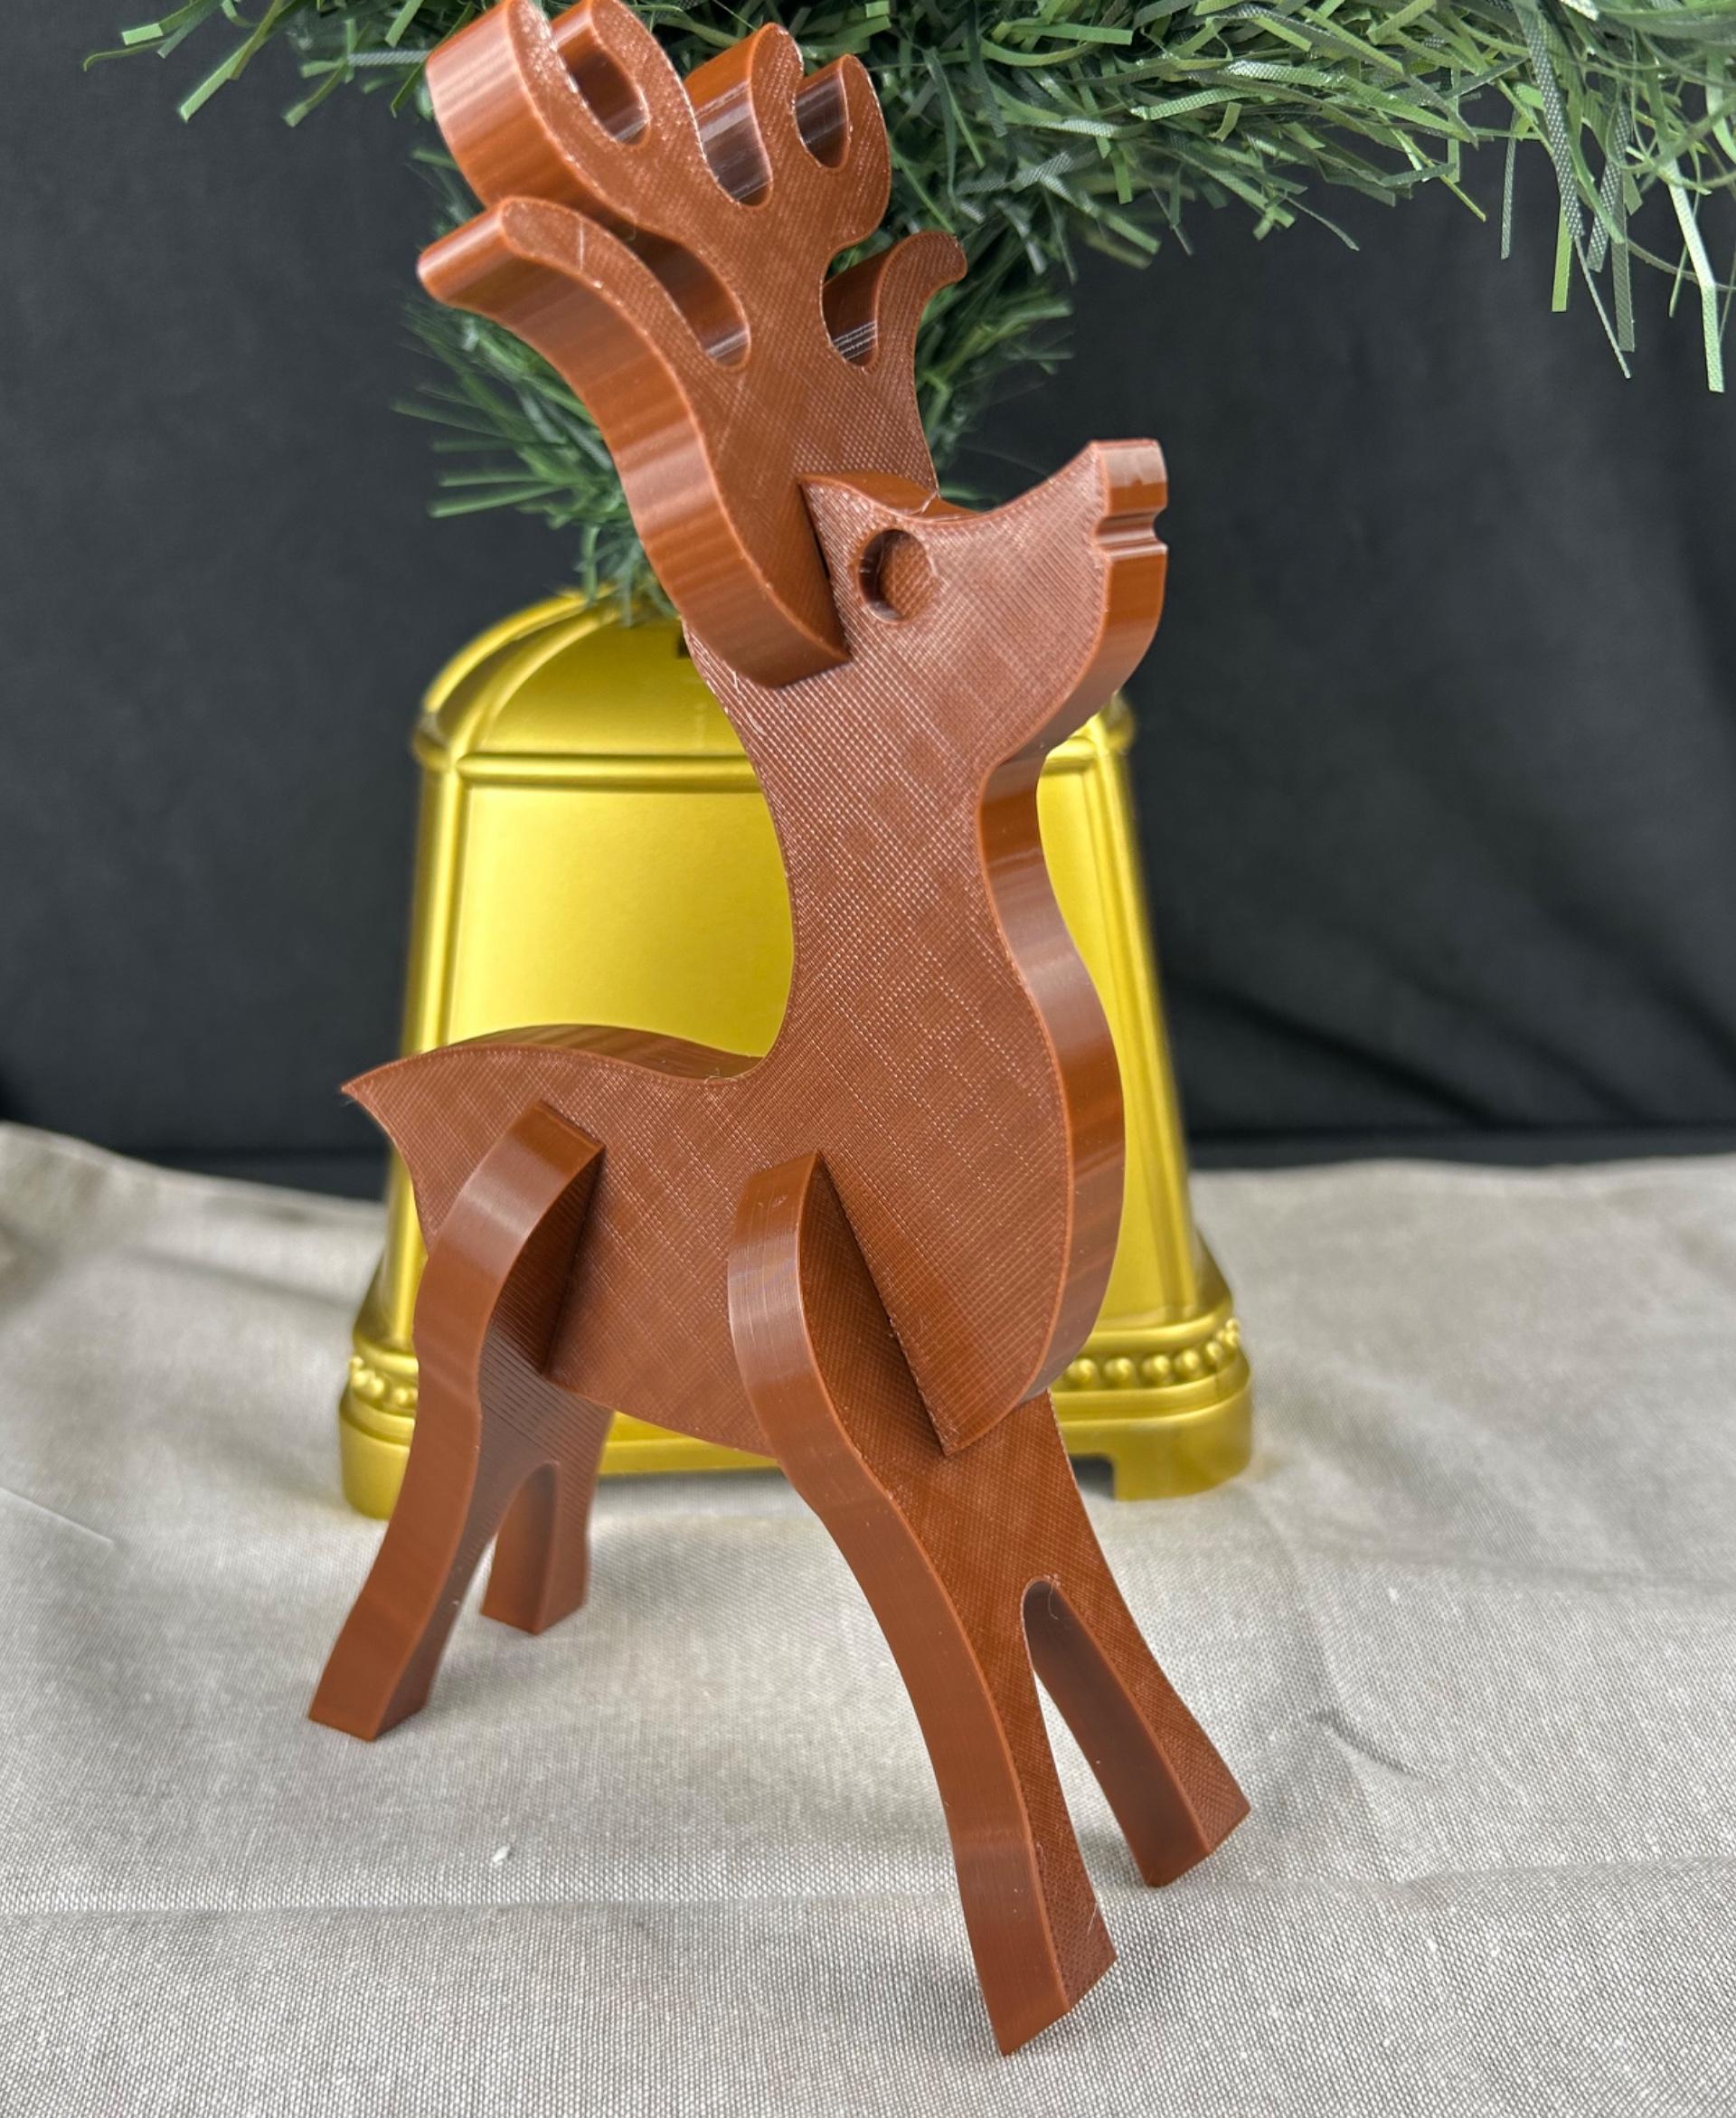 Reindeer Wood Cut Kit - Full size - 3d model